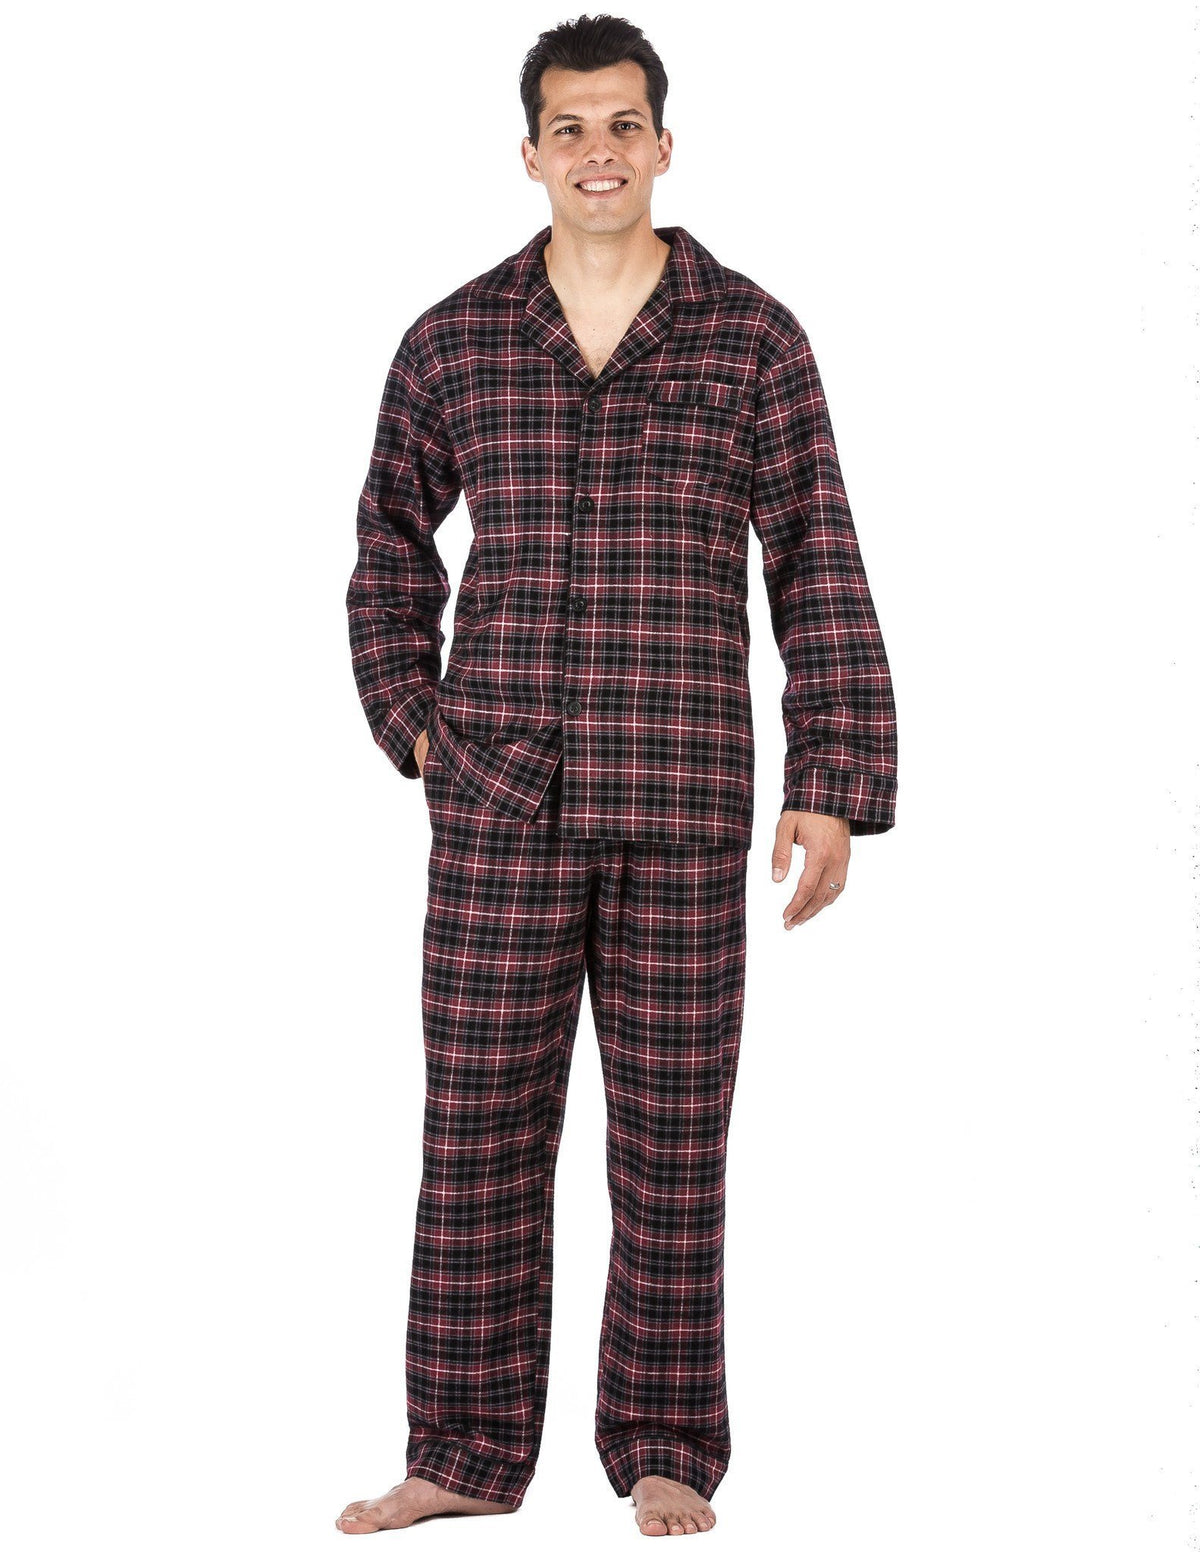 Relaxed Fit Men's Premium 100% Cotton Flannel Pajama Sleepwear Set - Burgundy/Grey Plaid